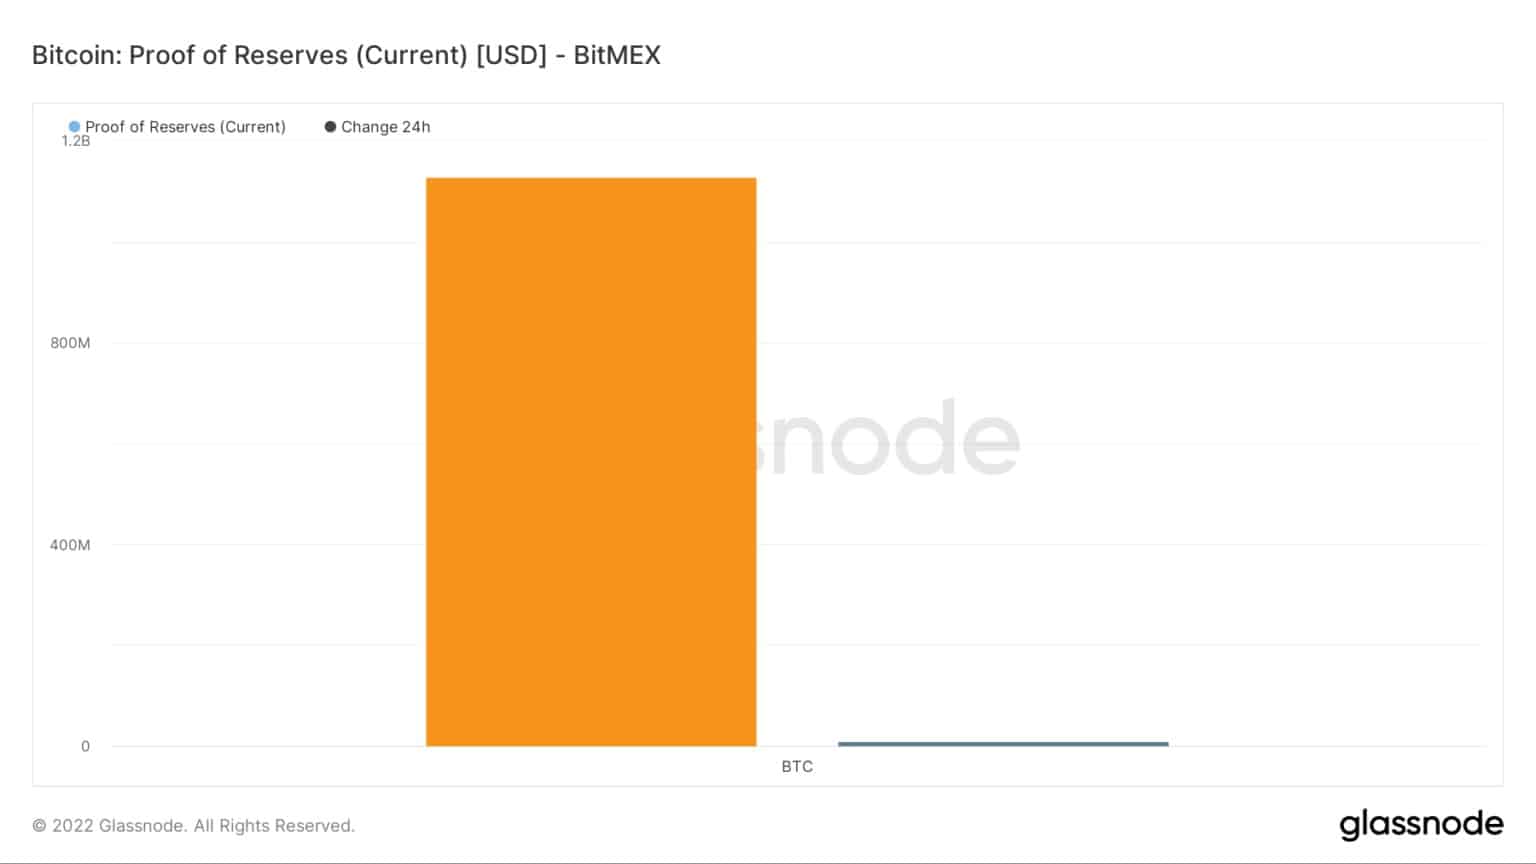 Prueba de reservas - BitMEX / Fuente: Glassnode